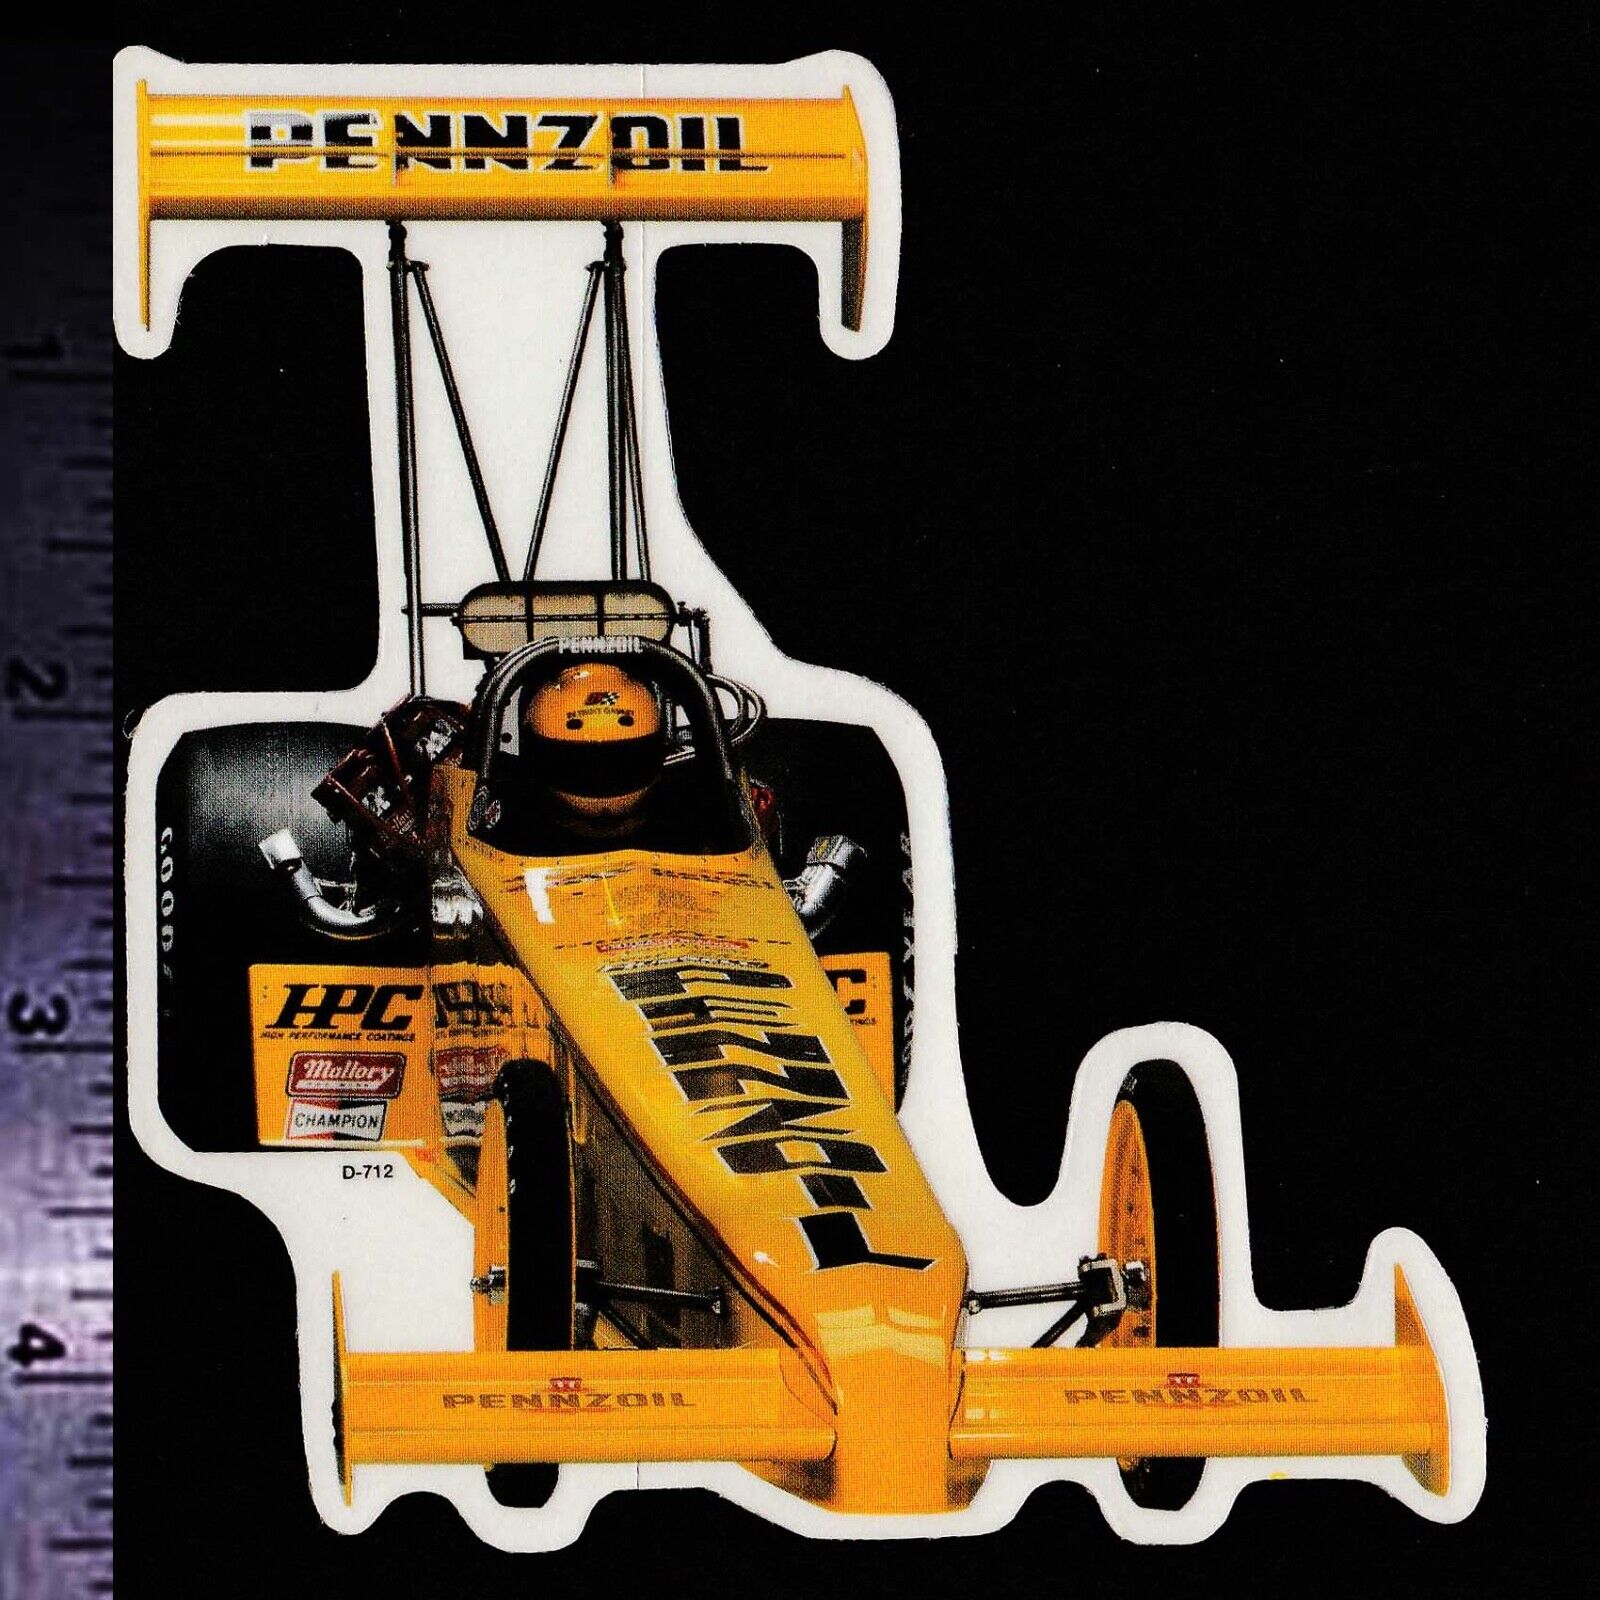 PENNZOIL Eddie Hill Top Fuel Dragster - Orig. Vintage Racing Decal/Sticker NHRA